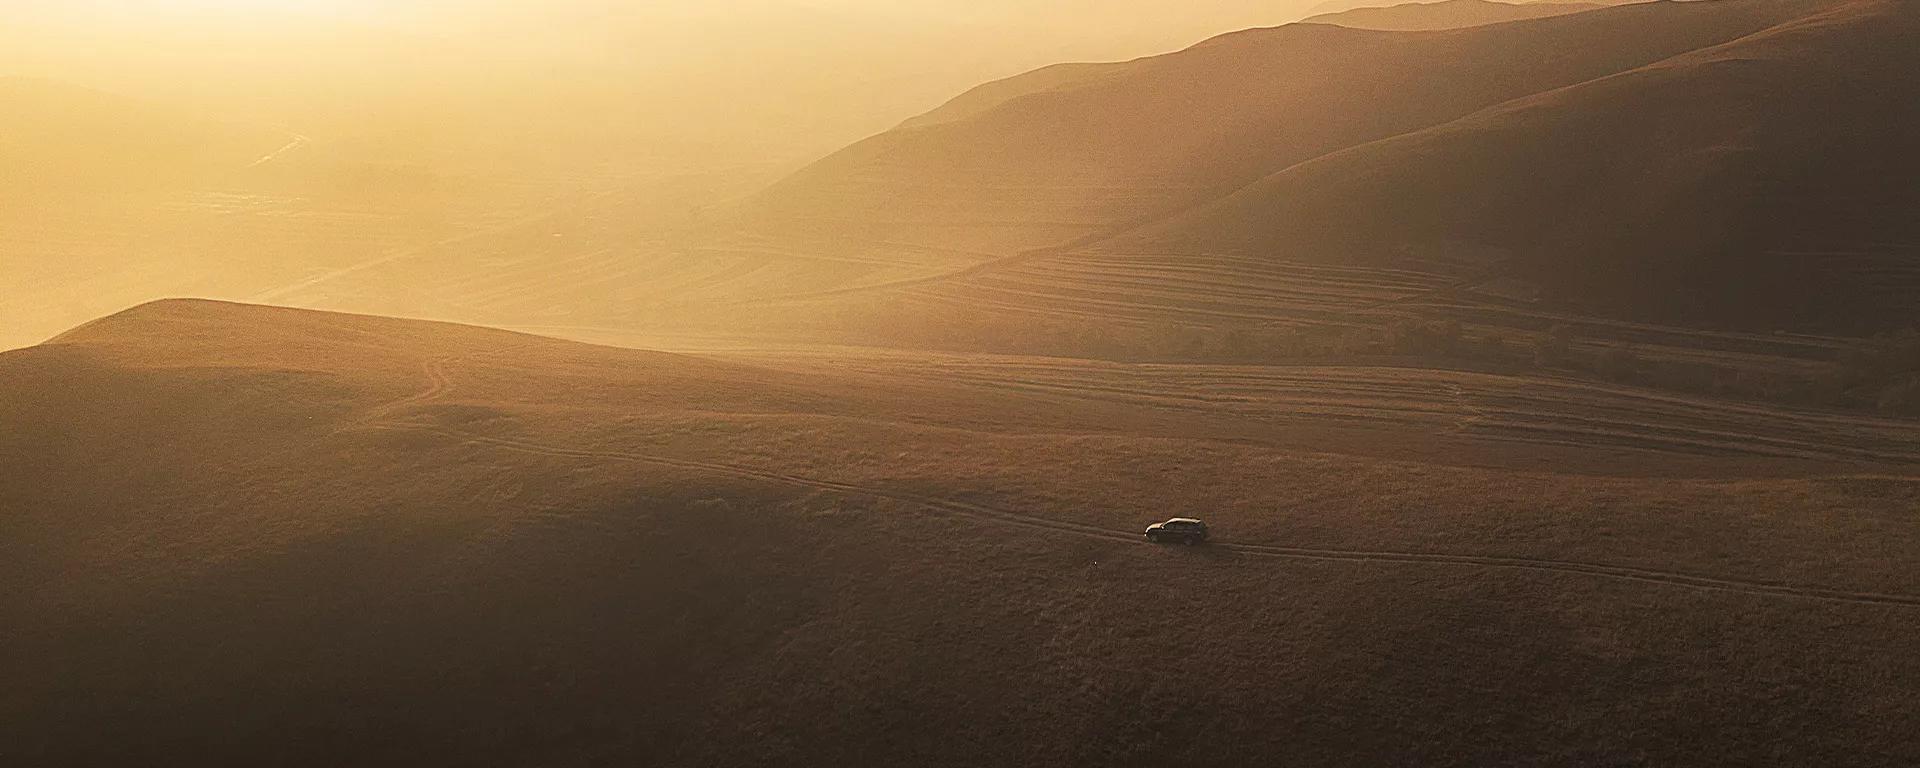 A car driving through a sandy desert